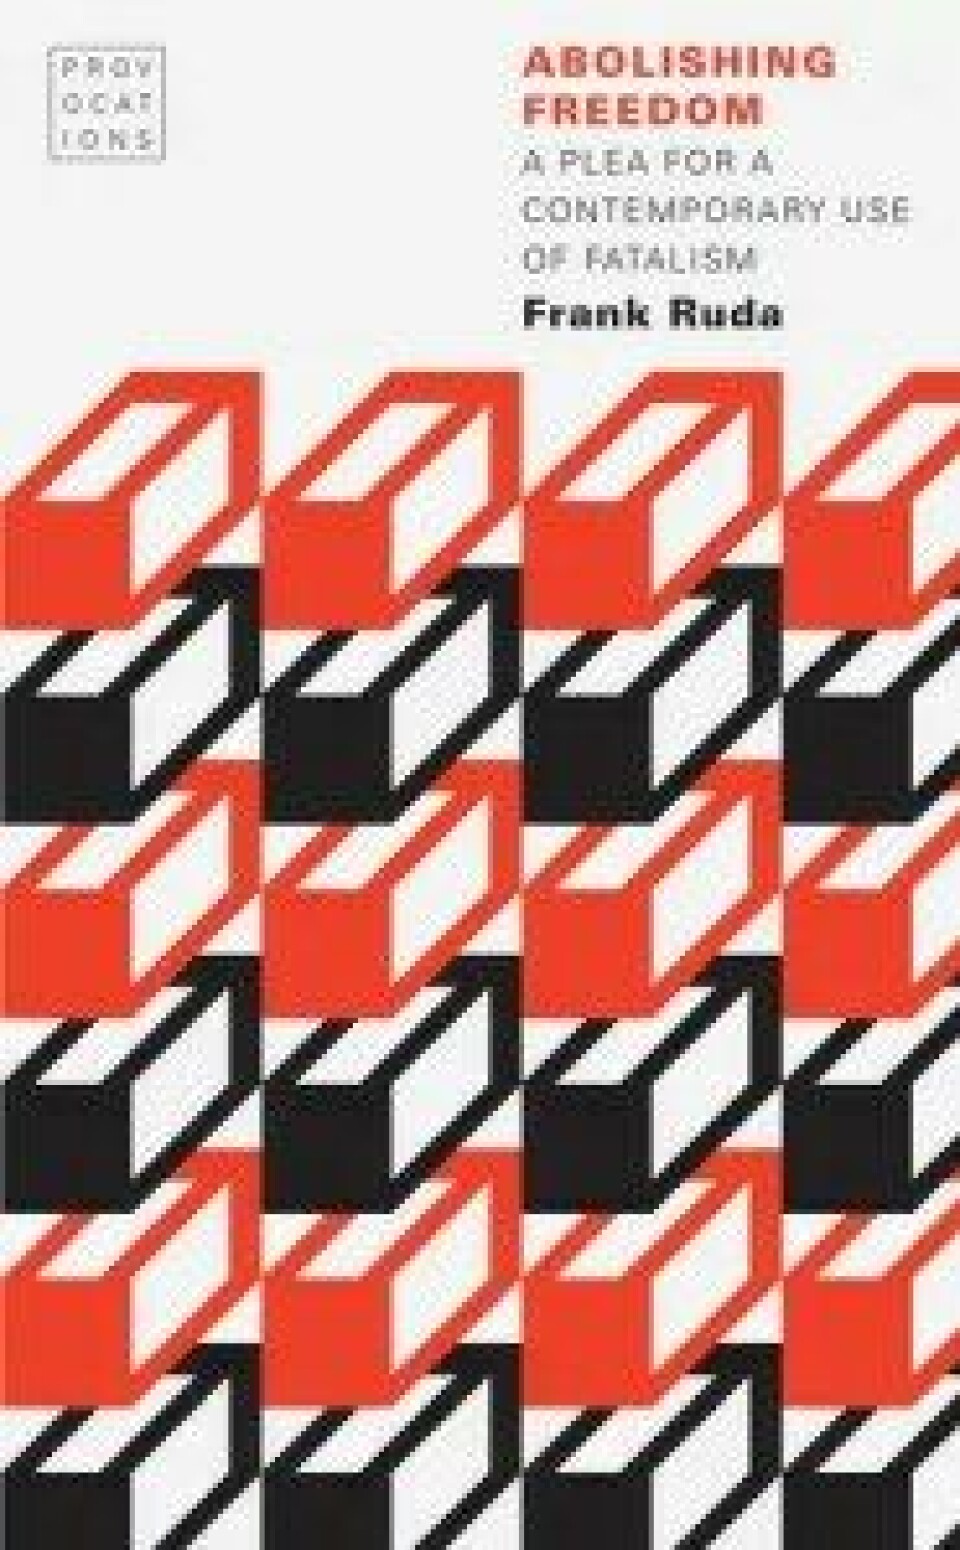 Frank Ruda, Abolishing Freedom: A Plea for a Contemporary Use of Fatalism. 2016. University of Nebraska Press